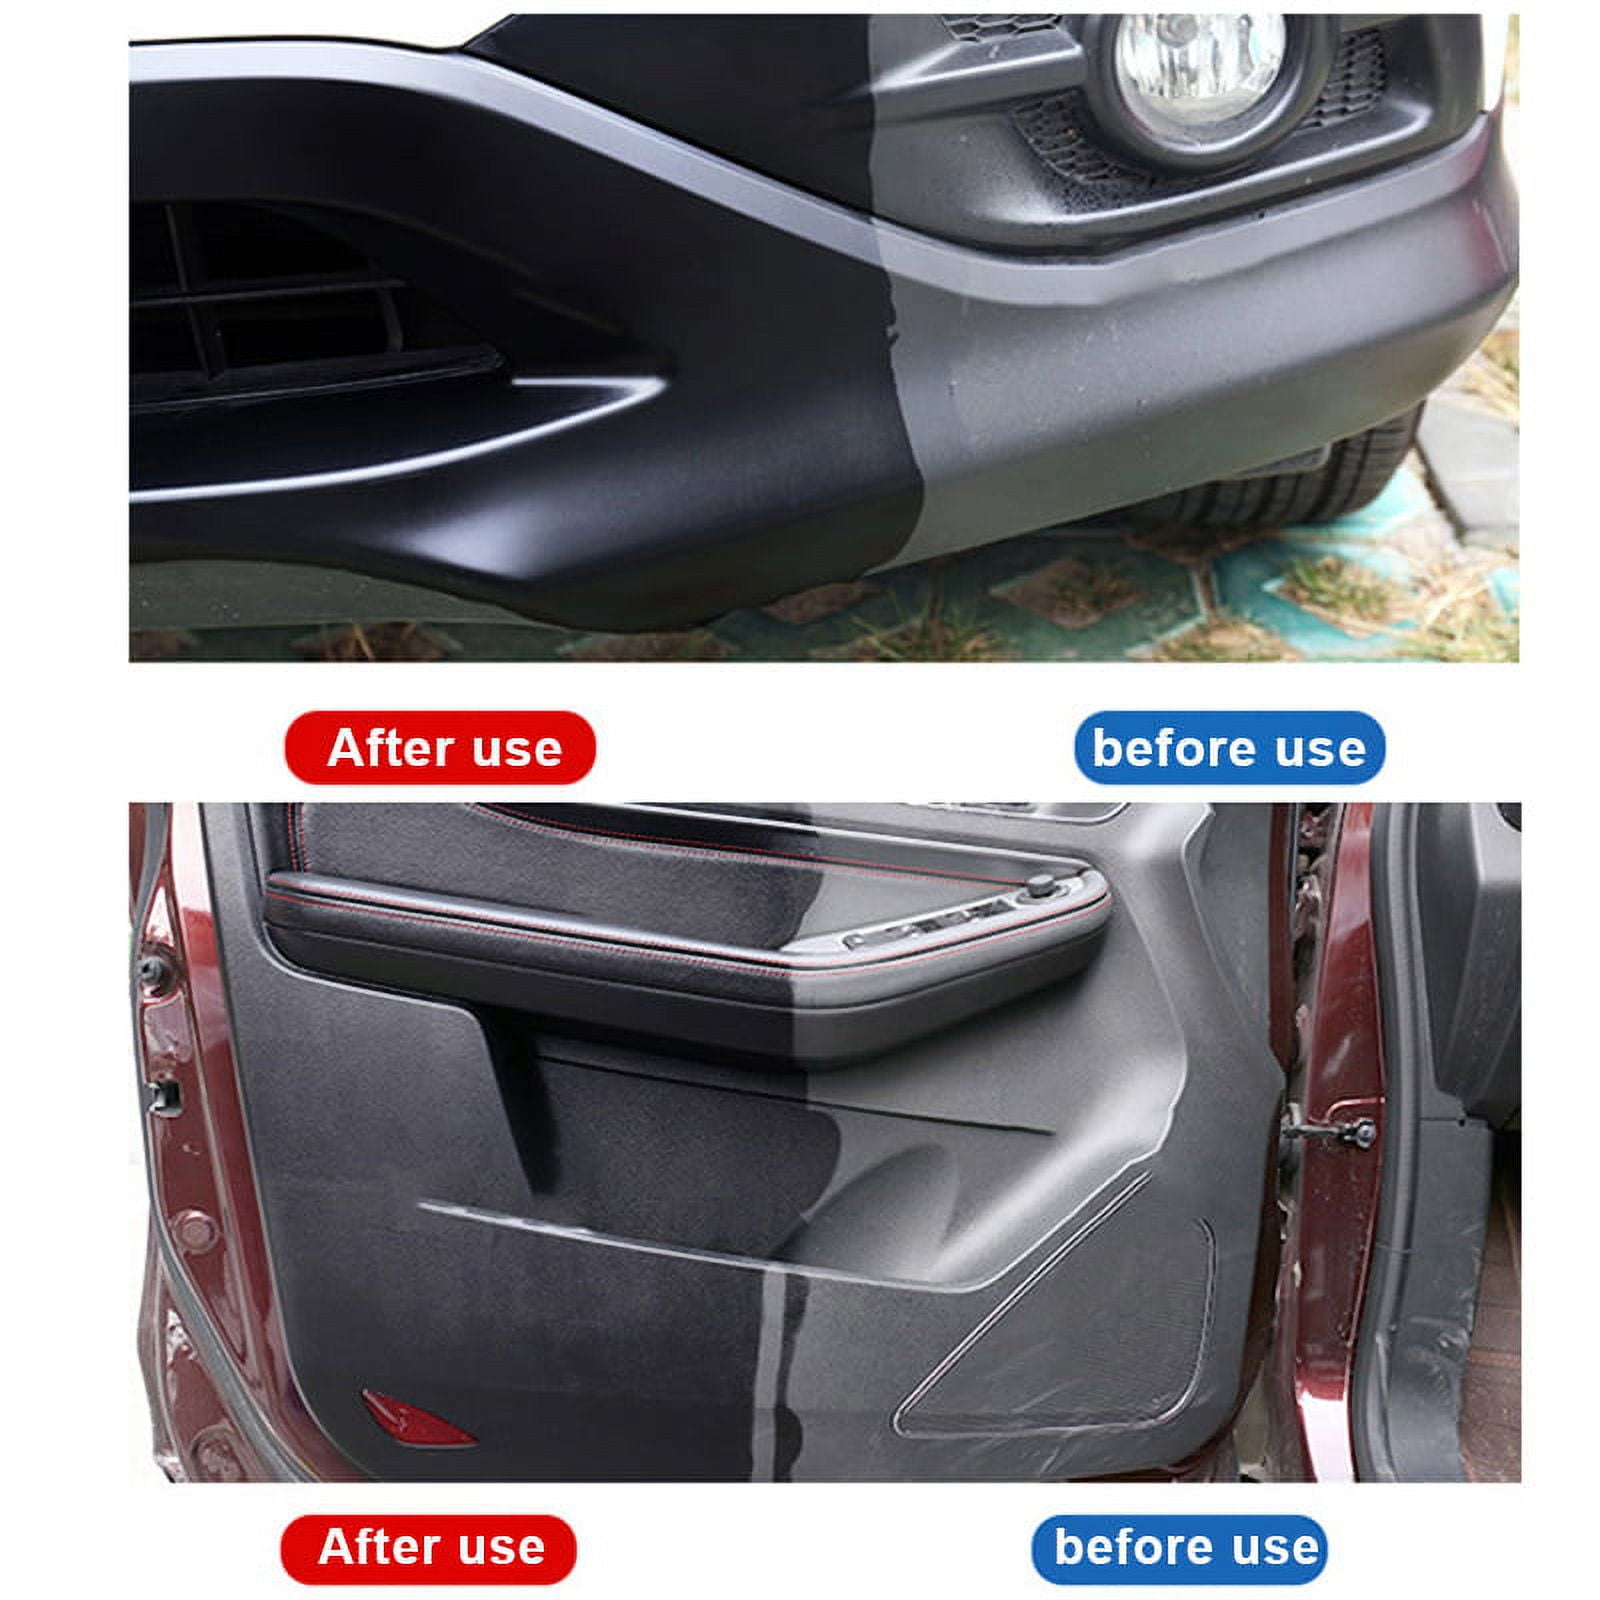 New Plastic Restorer Coating Agent 30ml For Car Interior Plastic Leather  Refurbishment Coating Car Refurbishing Cleaner From Skywhite, $2.03